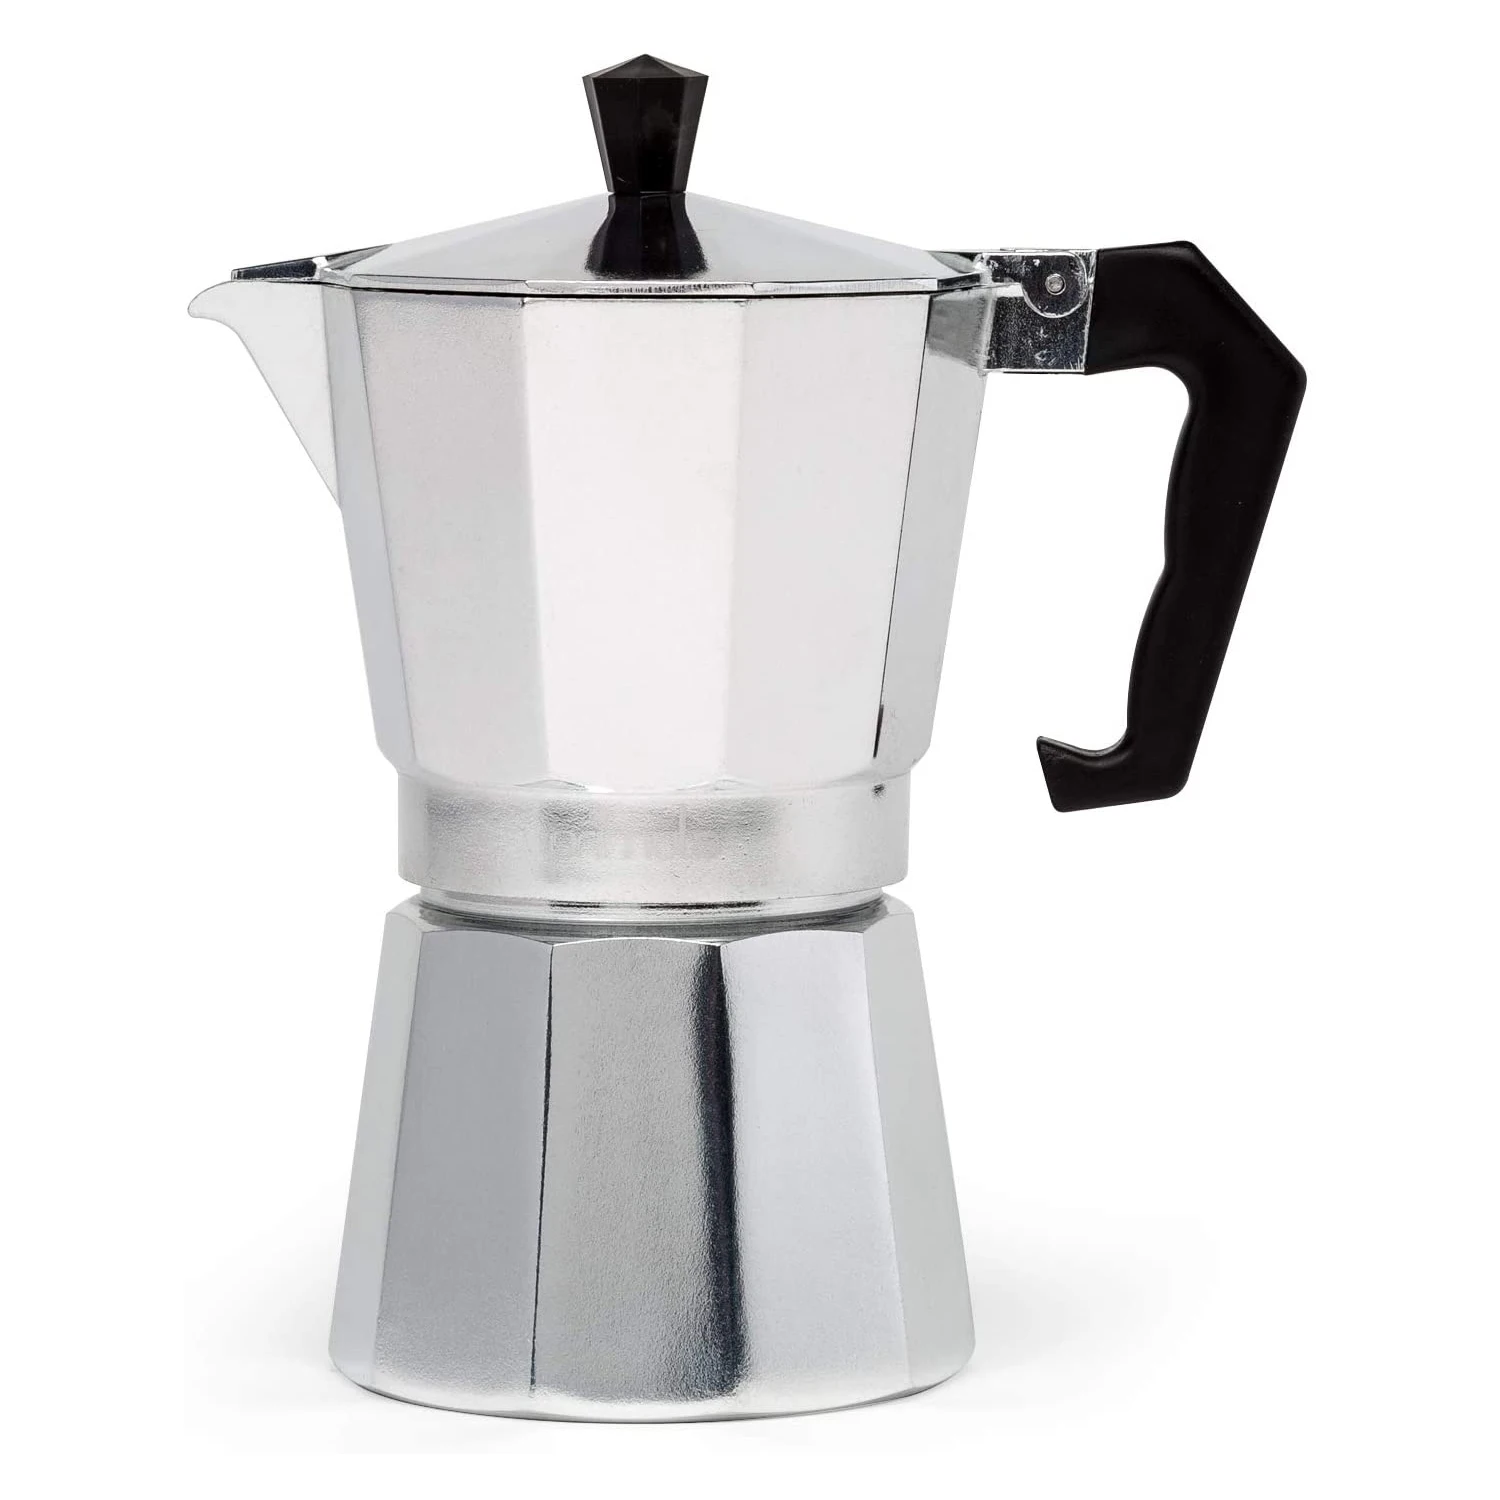 

2022 New Cafetera Bialetti Italy Aluminum Espresso Express Stovetop Maker Moka Coffee Pot 3Cup, Silver, black, customizable